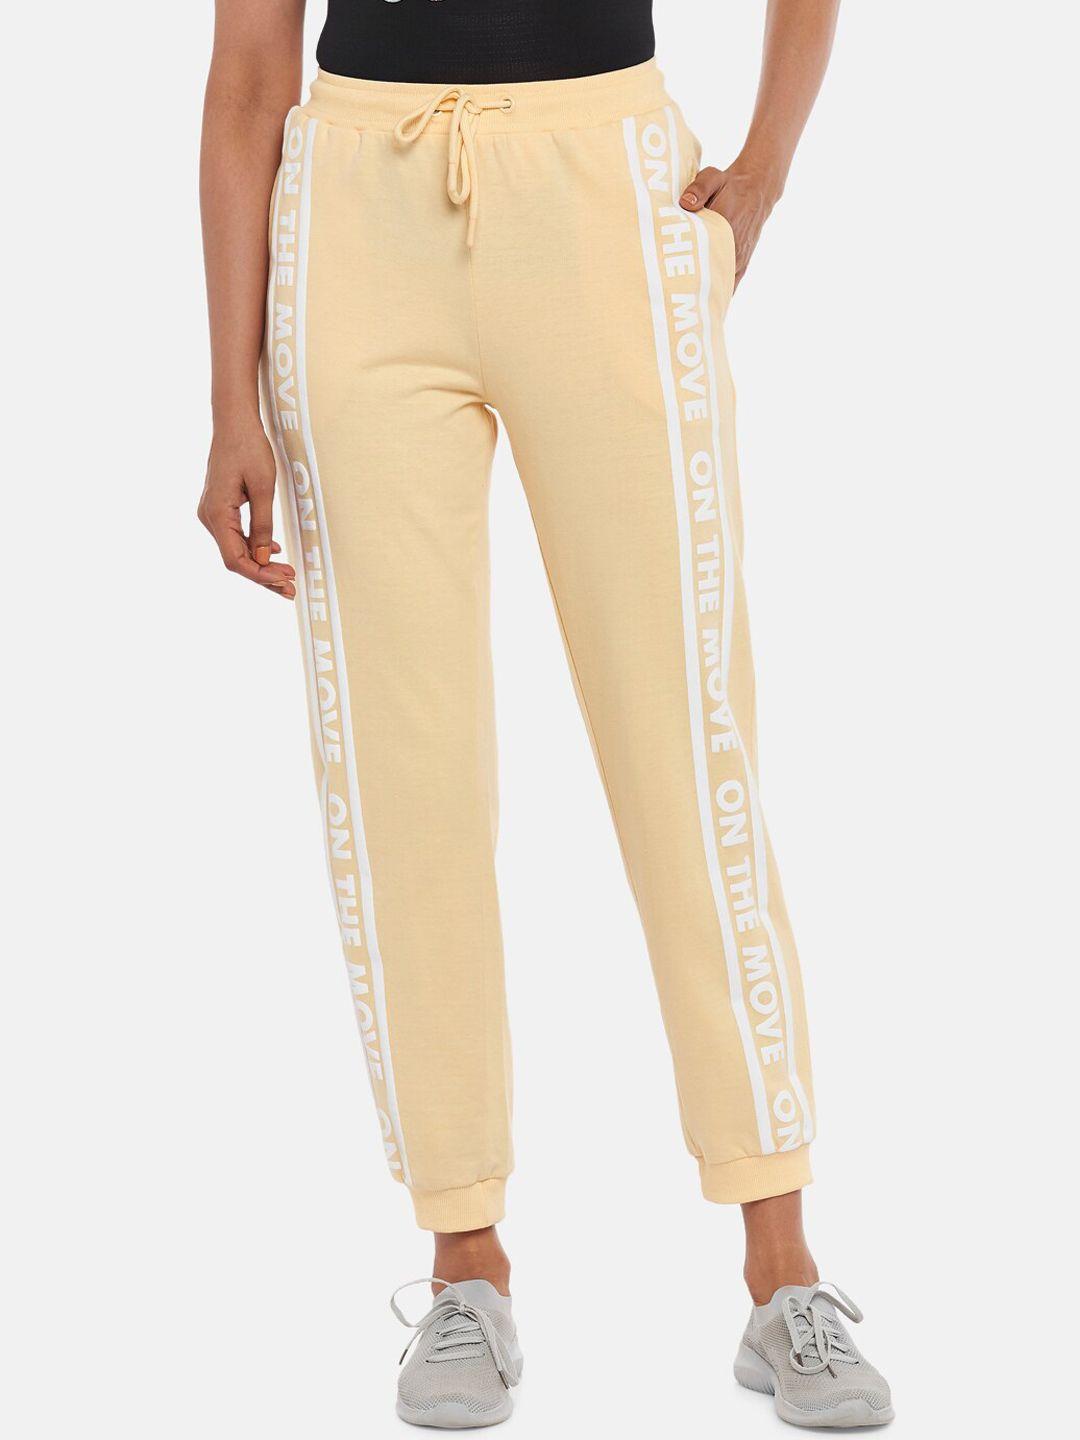 ajile by pantaloons women yellow printed cotton joggers